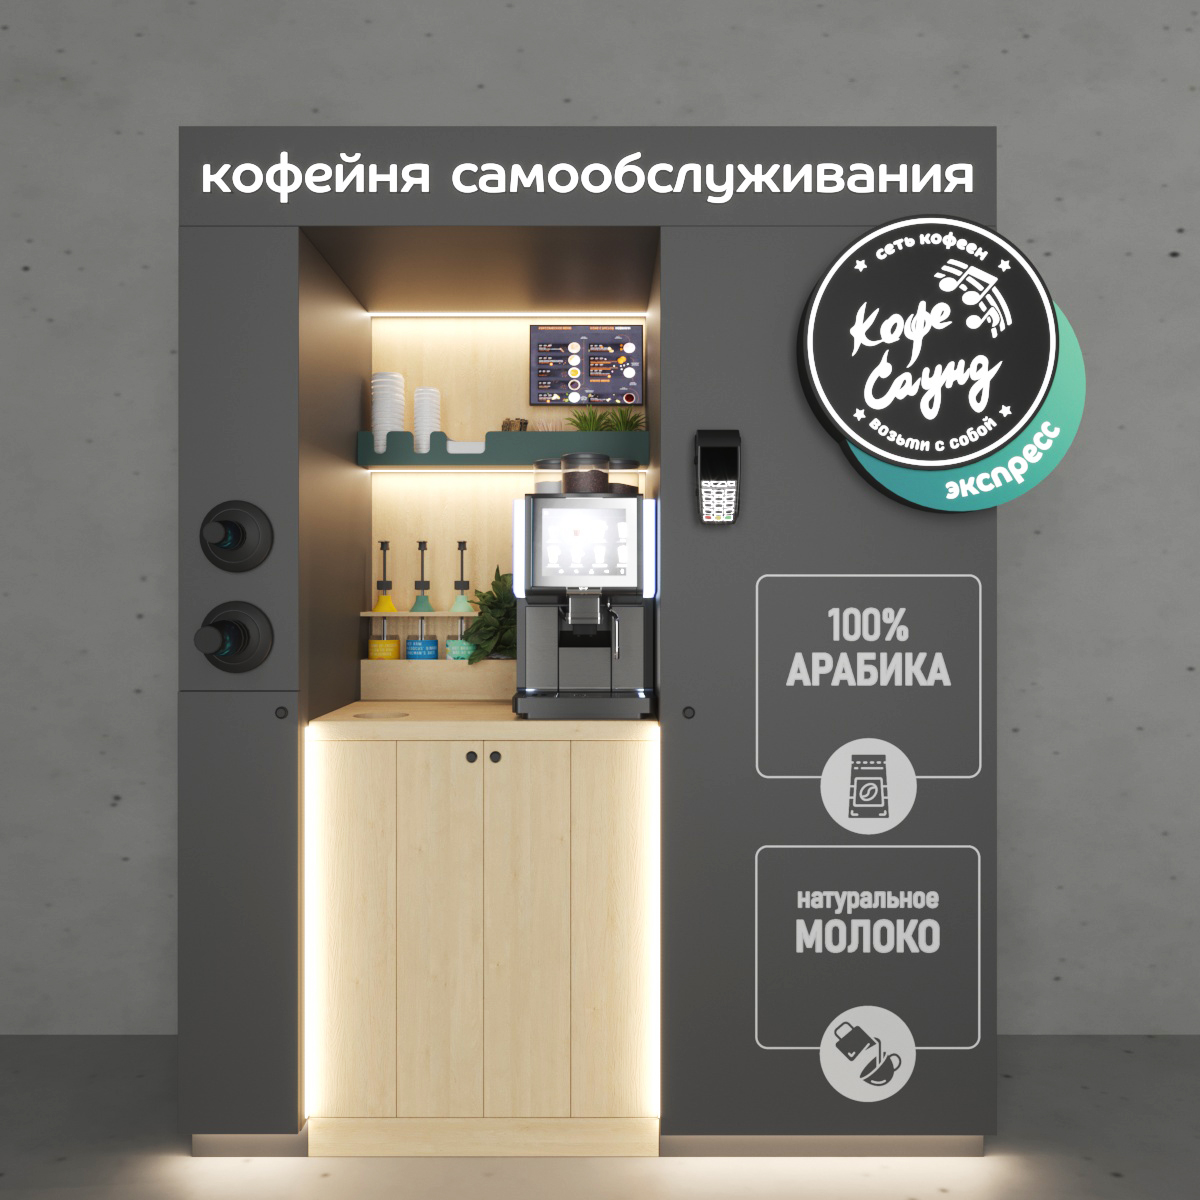 Франшиза кофейни в казахстане. Кофейня самообслуживания. Кофе самообслуживание. Мини кофейня самообслуживания. Бизнес кофе самообслуживания.